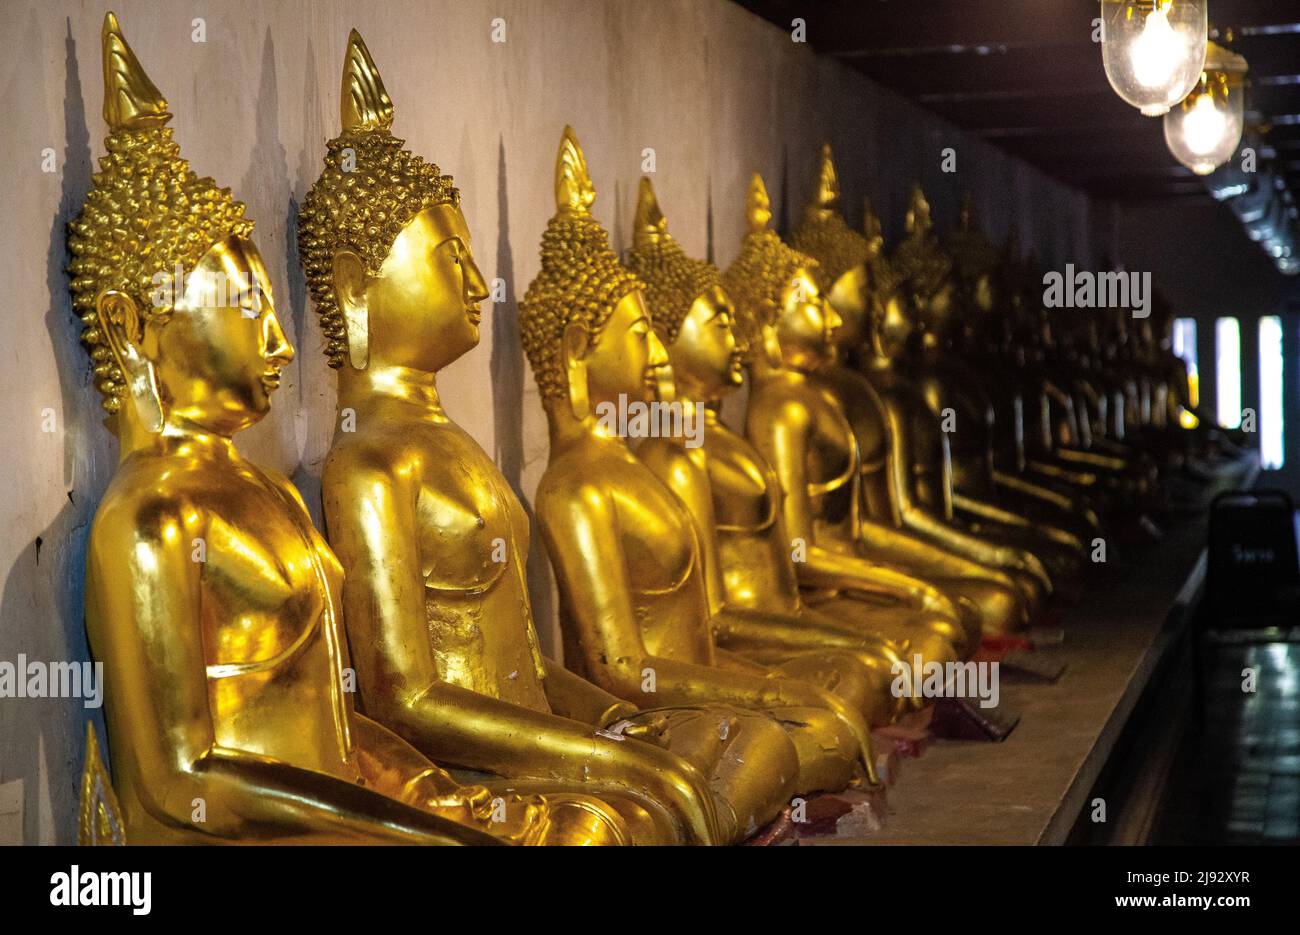 Wat Phra Si Rattana Mahathat Woramahawihan, temple in Phitsanulok, Thailand Stock Photo